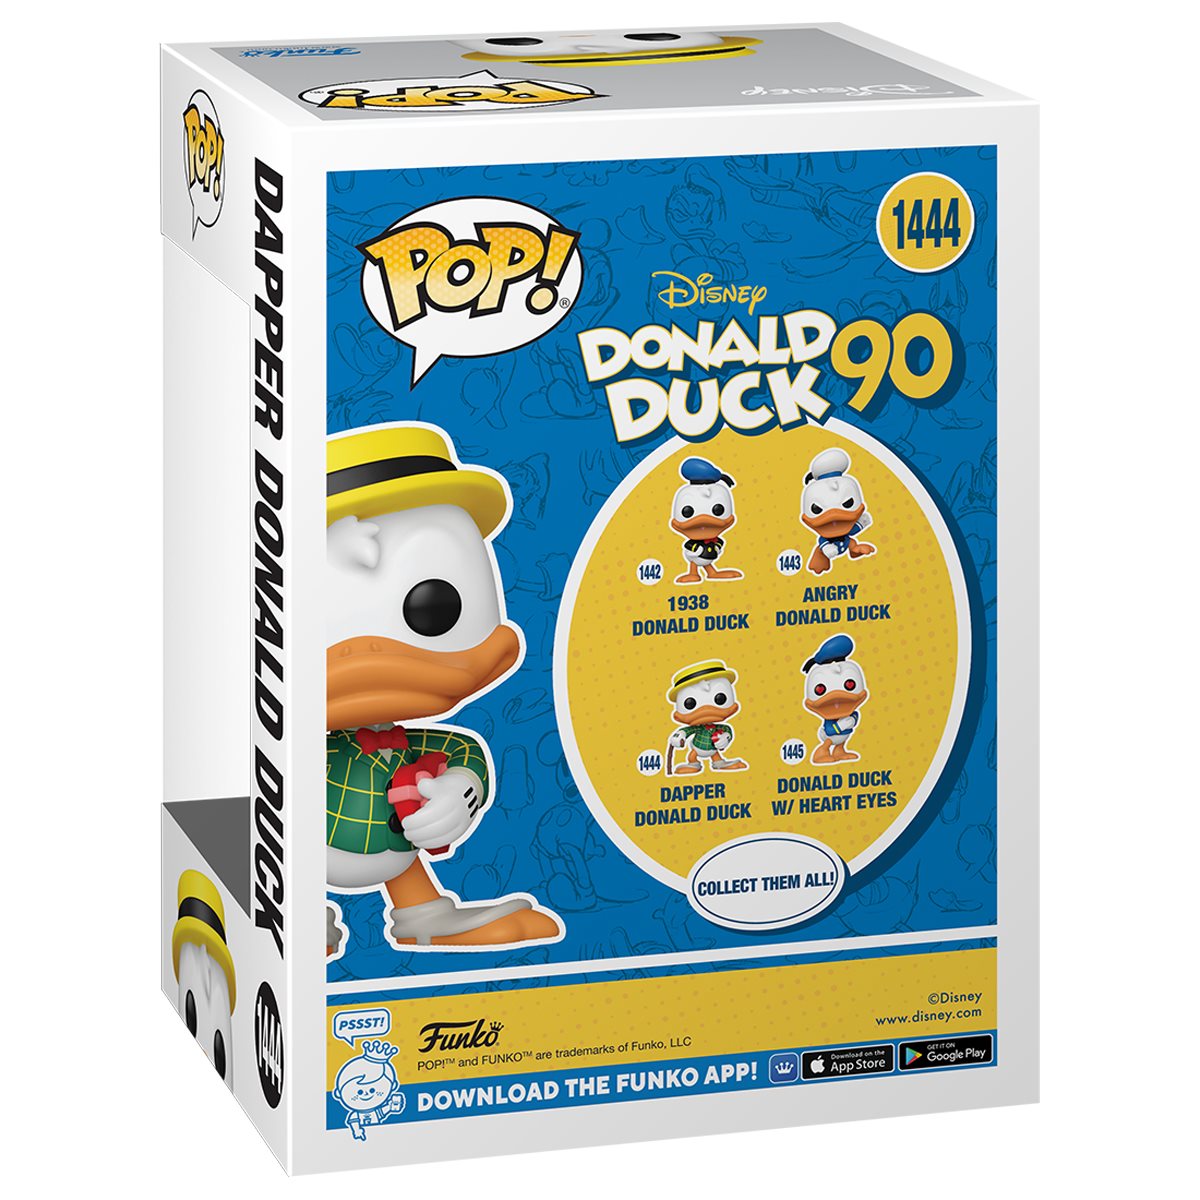 Funko Pop! Disney Donald Duck 90th Anniversary Dapper Donald Duck Vinyl Figure #1444